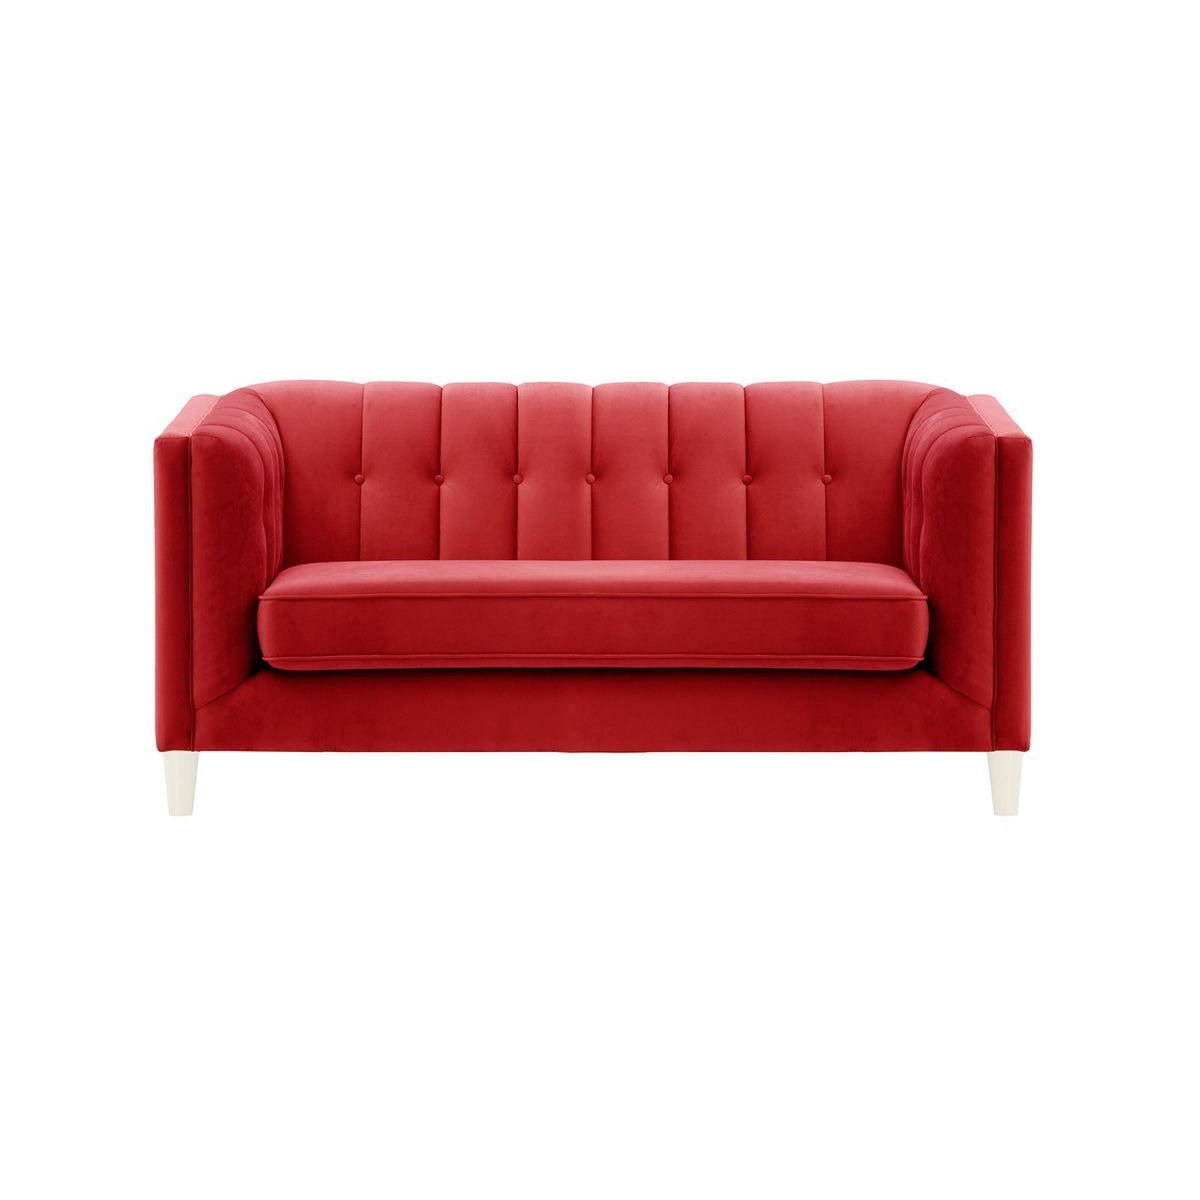 Sodre 2 Seater Sofa, dark red, Leg colour: white - image 1